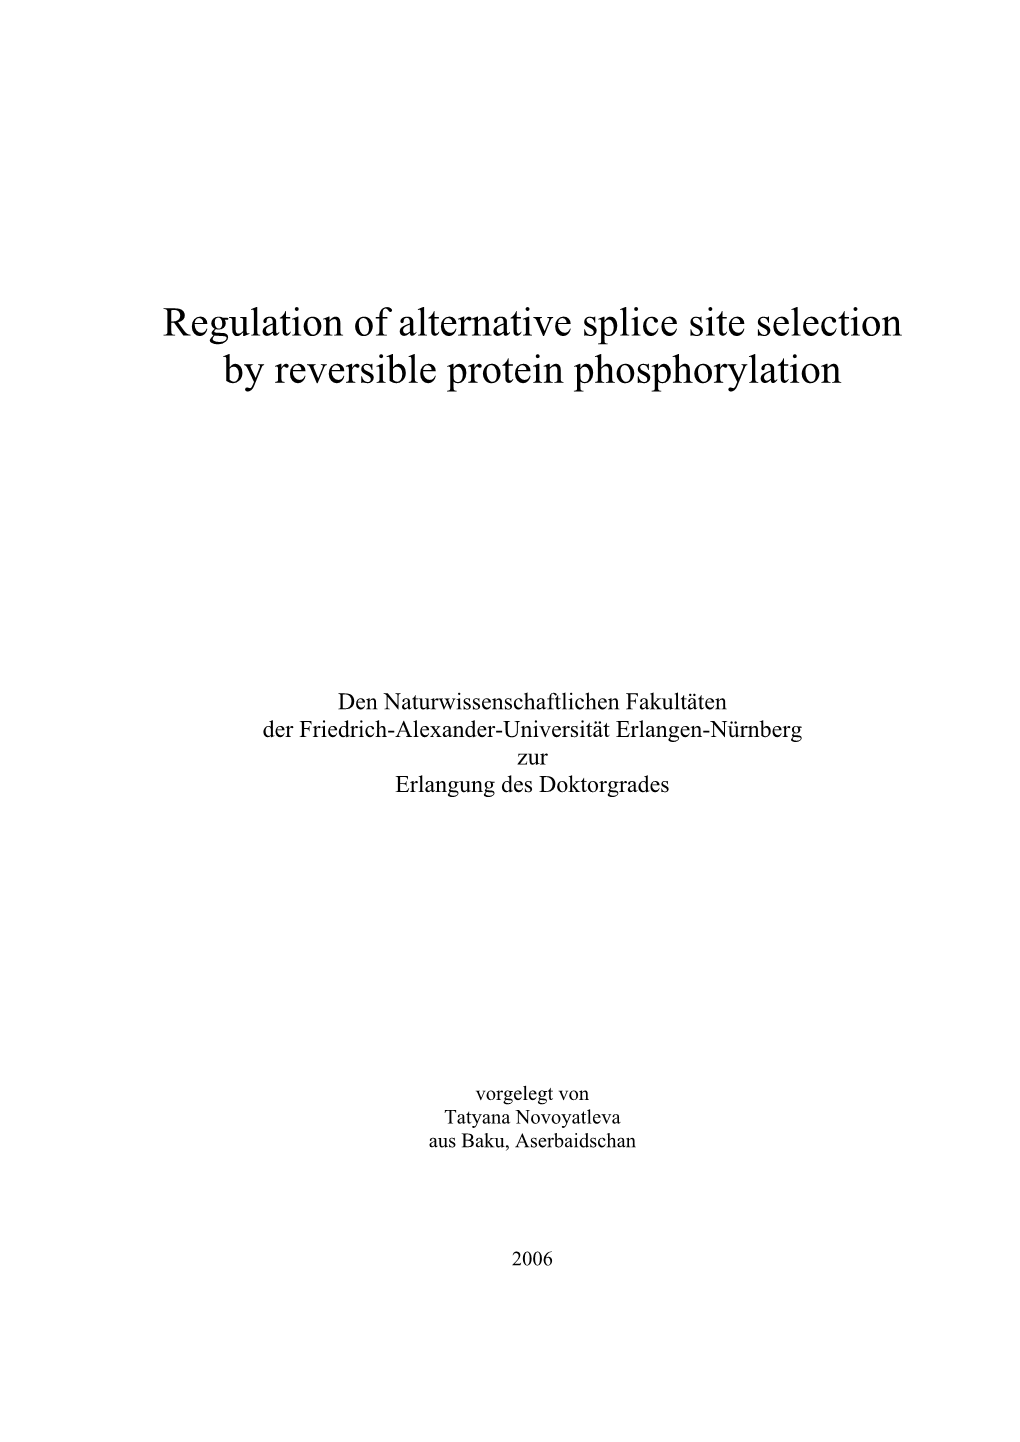 Regulation of Alternative Splice Site Selection by Reversible Protein Phosphorylation